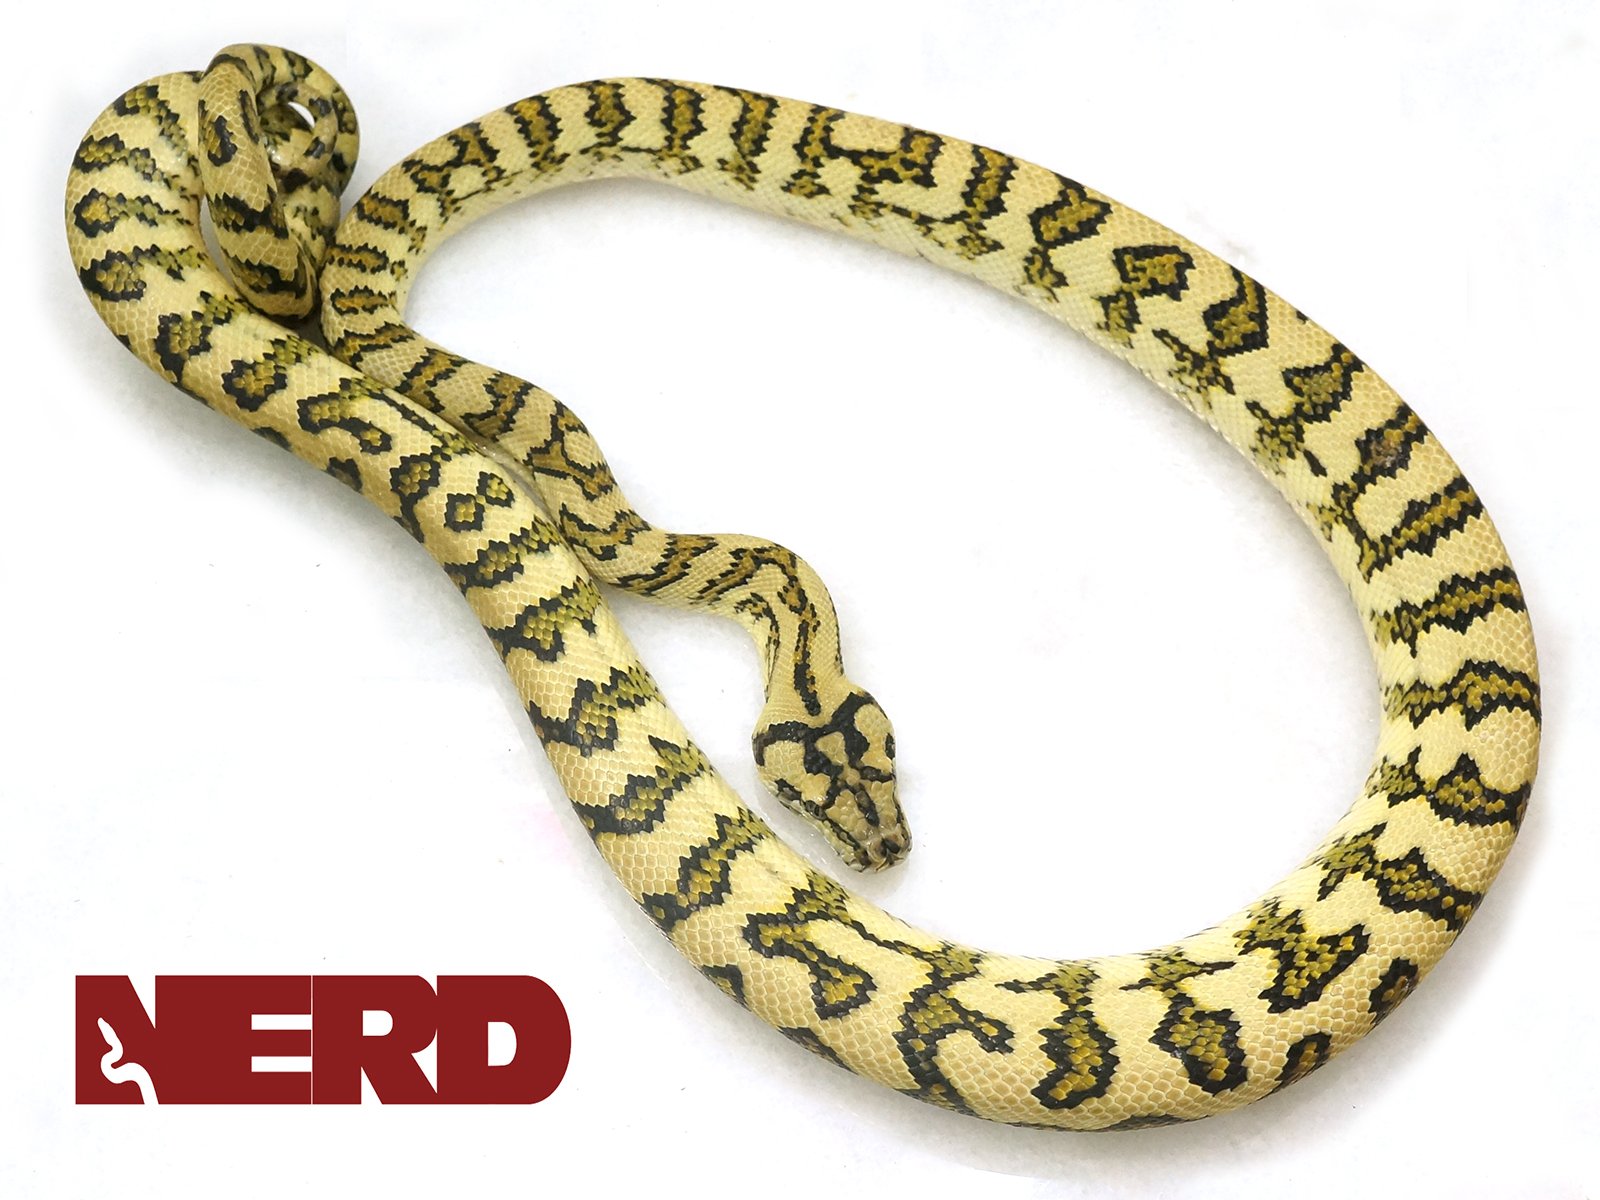 Jaguar Carpet Python by New England Reptile Distributors